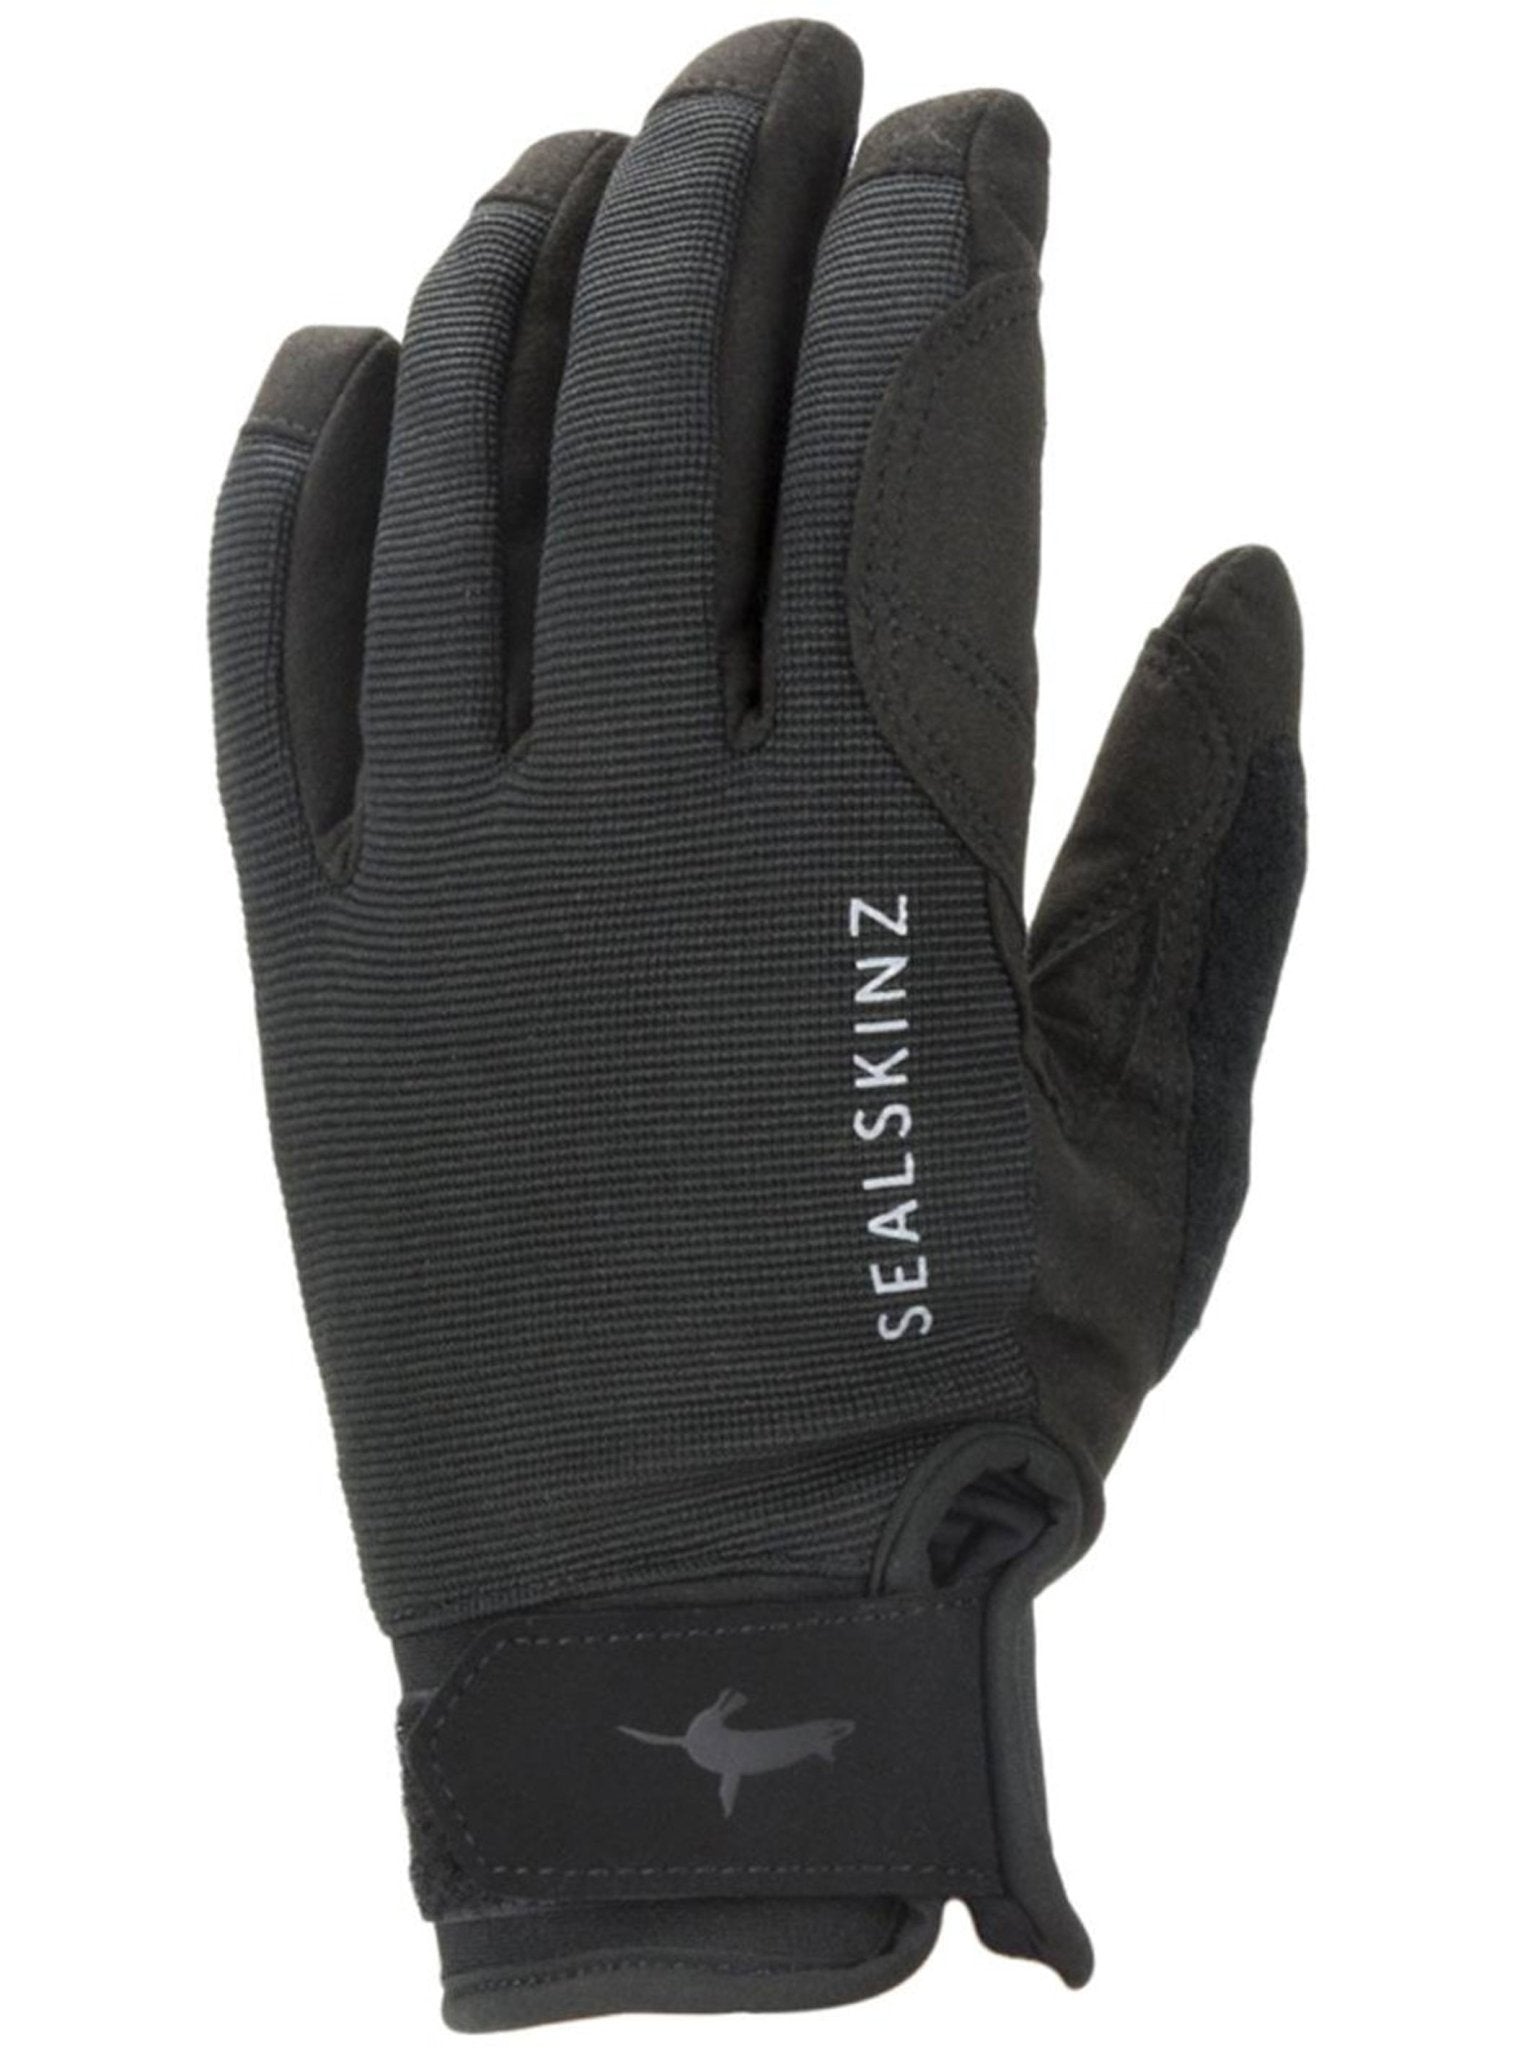 4elementsclothingSealSkinzSealSkinz - Harling Waterproof Gloves and All Weather GloveGloves12123072000110